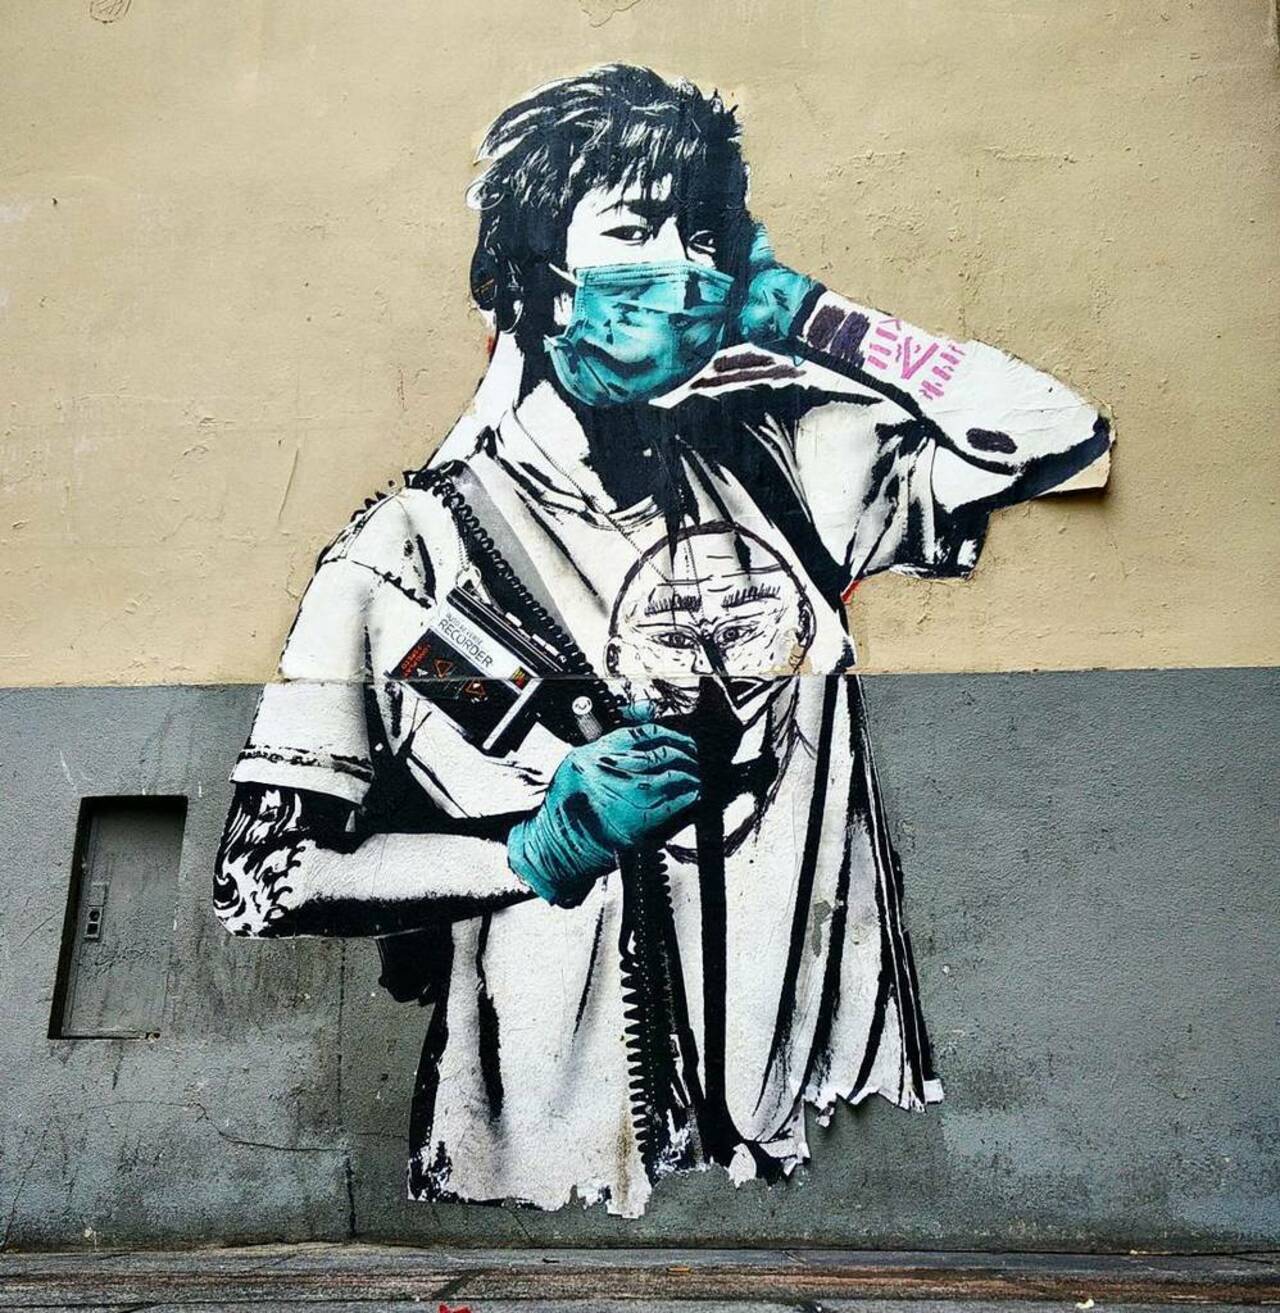 Pasteup by @eddiecolla #eddiecolla

#streetart #streetartparis #parisstreetart #parisgraffiti #graffiti #graffitiar… https://t.co/PptxC04ZSZ